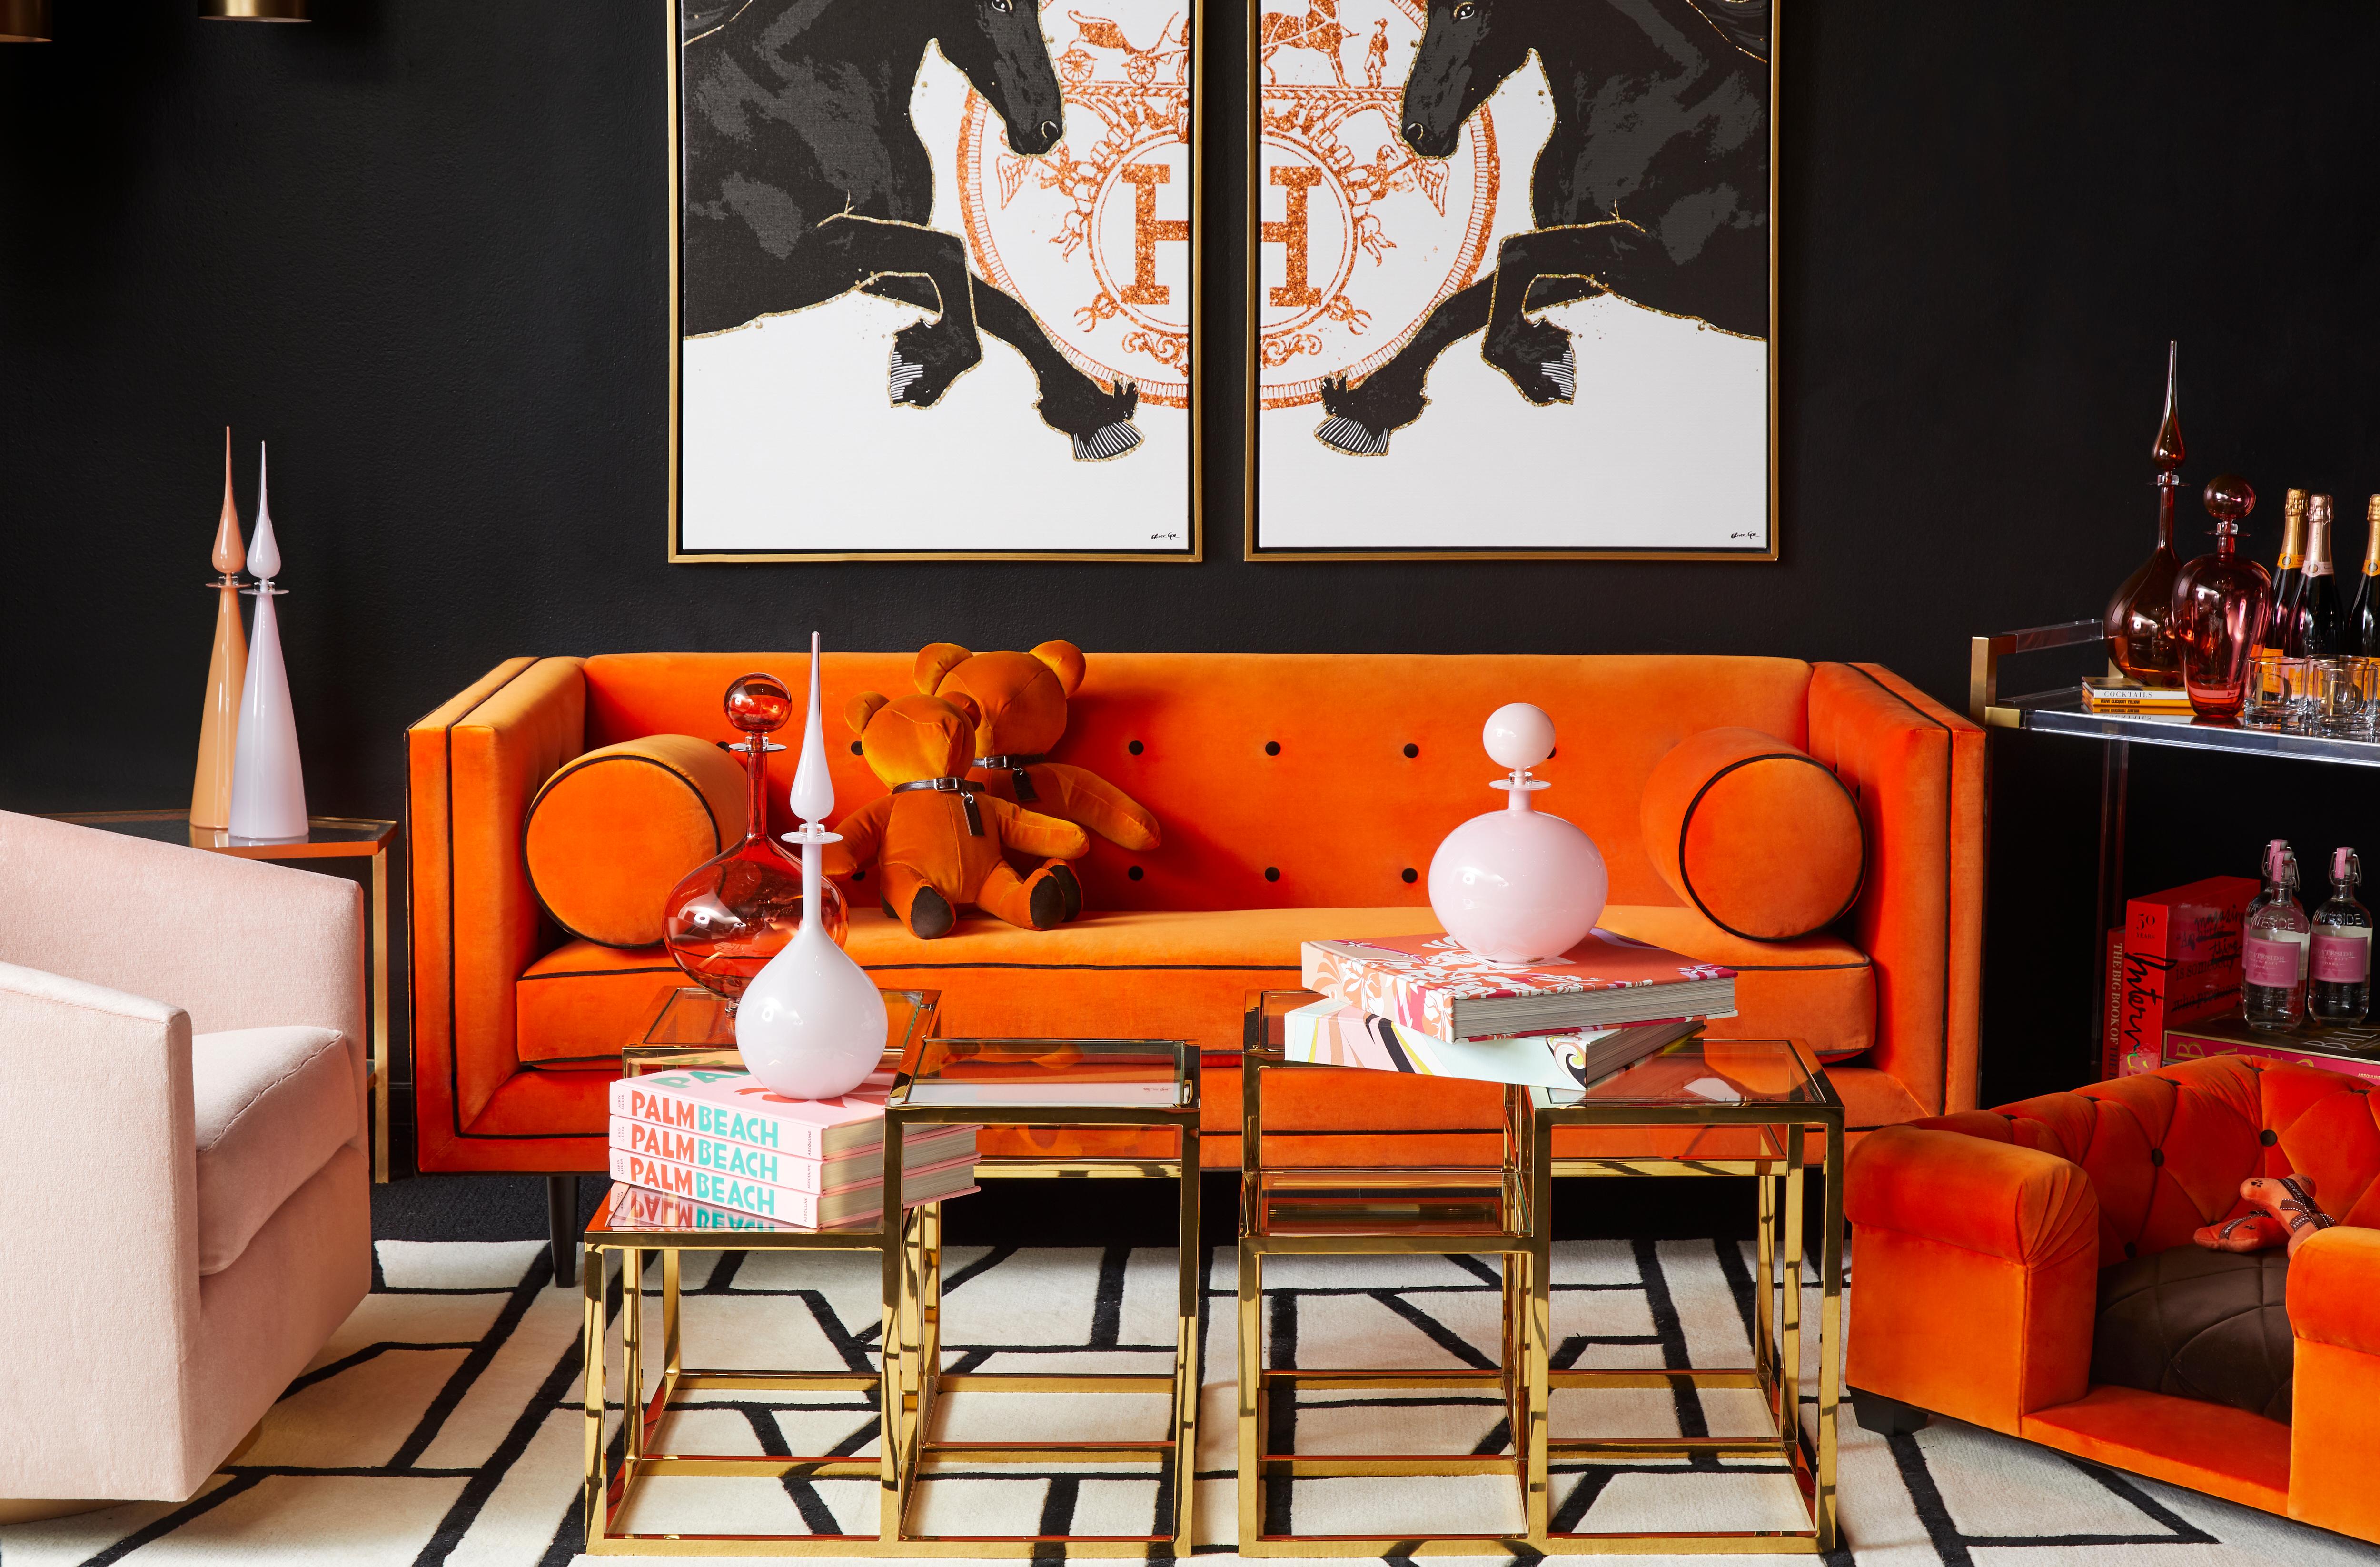 hermes orange sofa